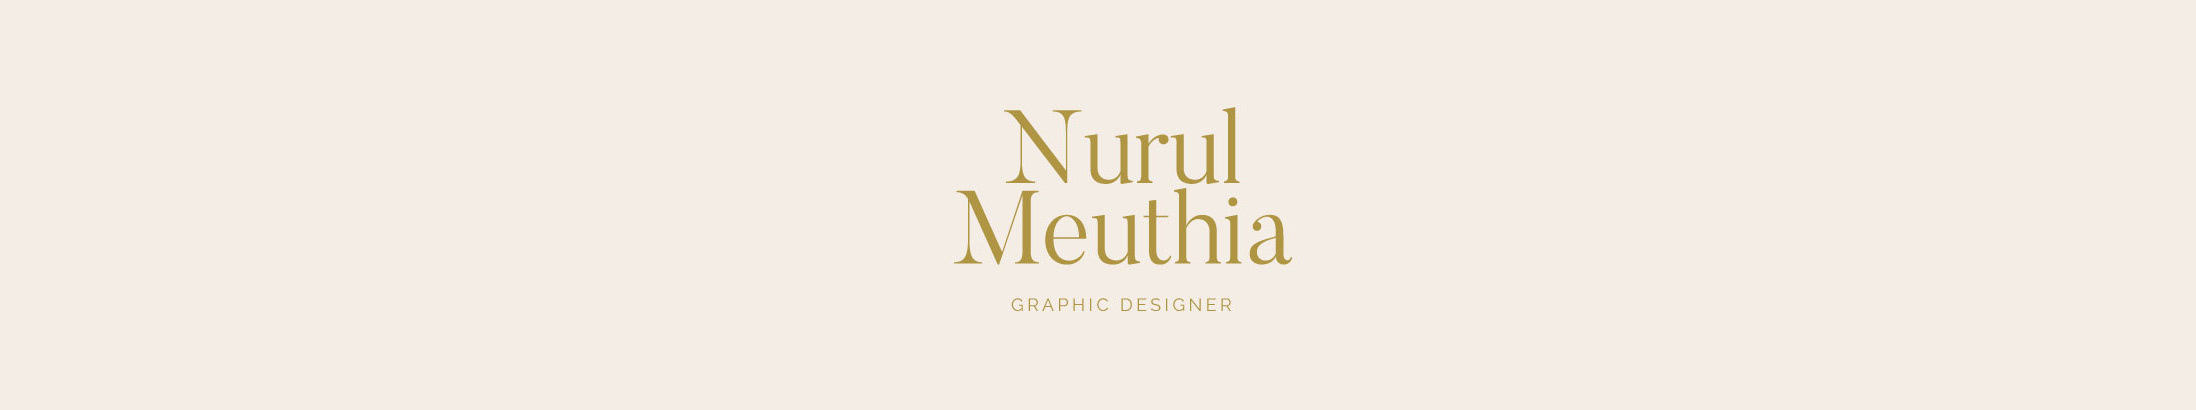 Nurul Meuthia's profile banner